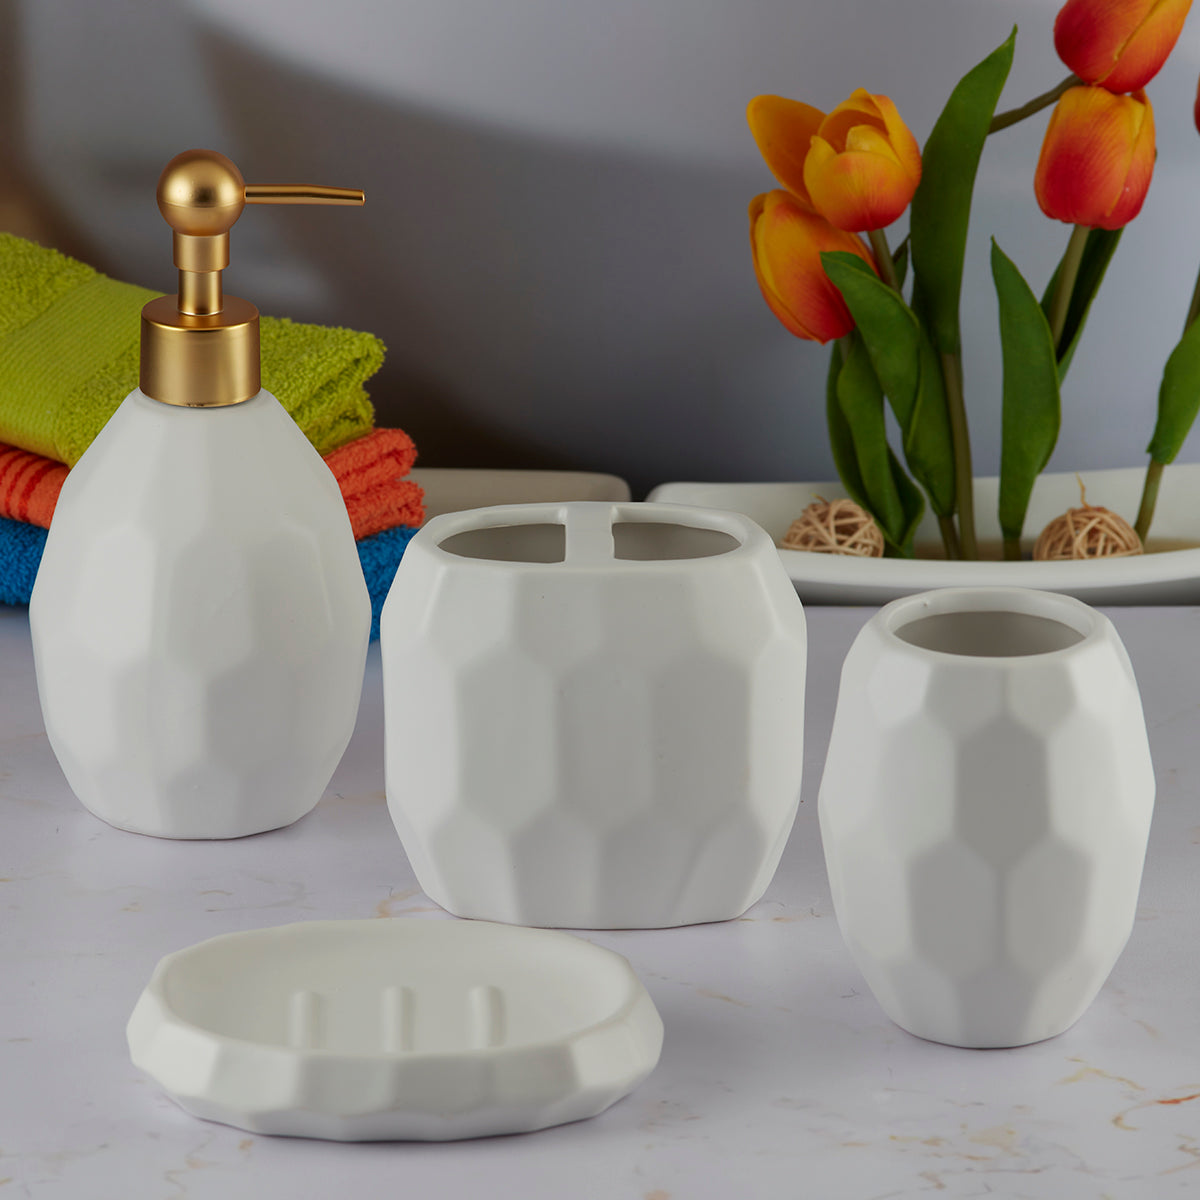 Ceramic Bathroom Accessories Set of 4 Bath Set with Soap Dispenser (5761)